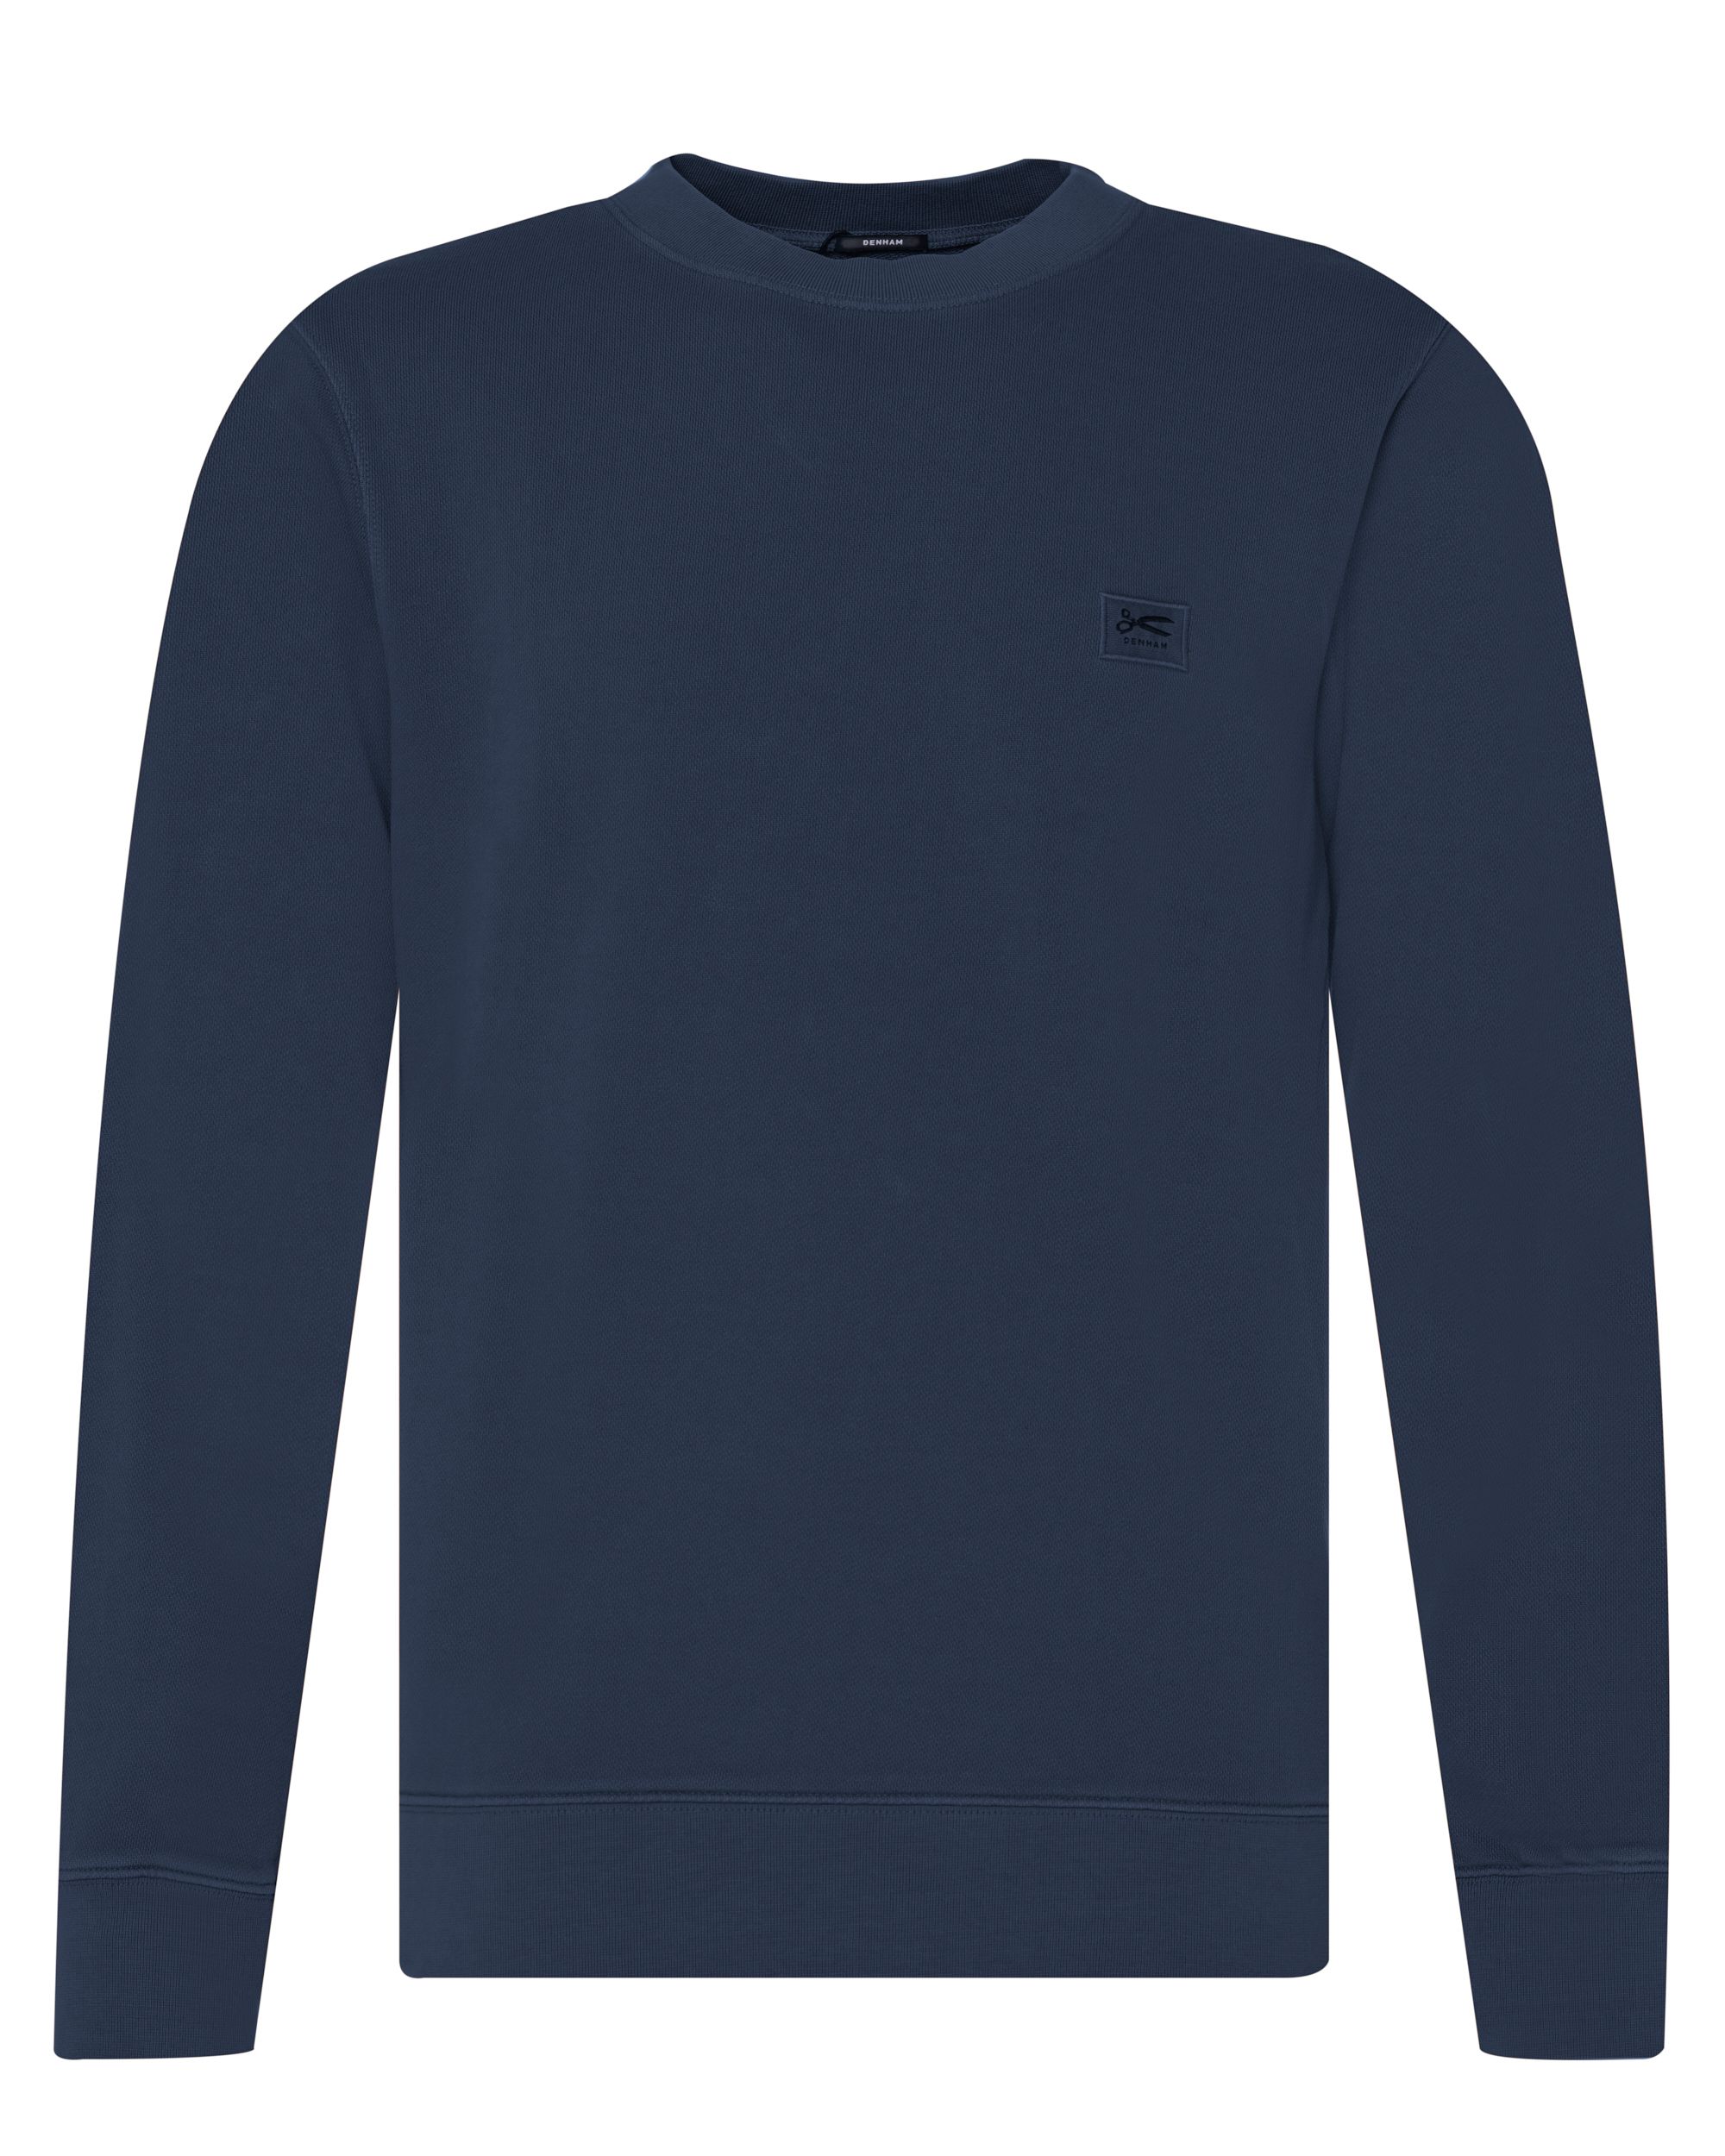 DENHAM Applique Sweater Donker blauw 081367-001-L